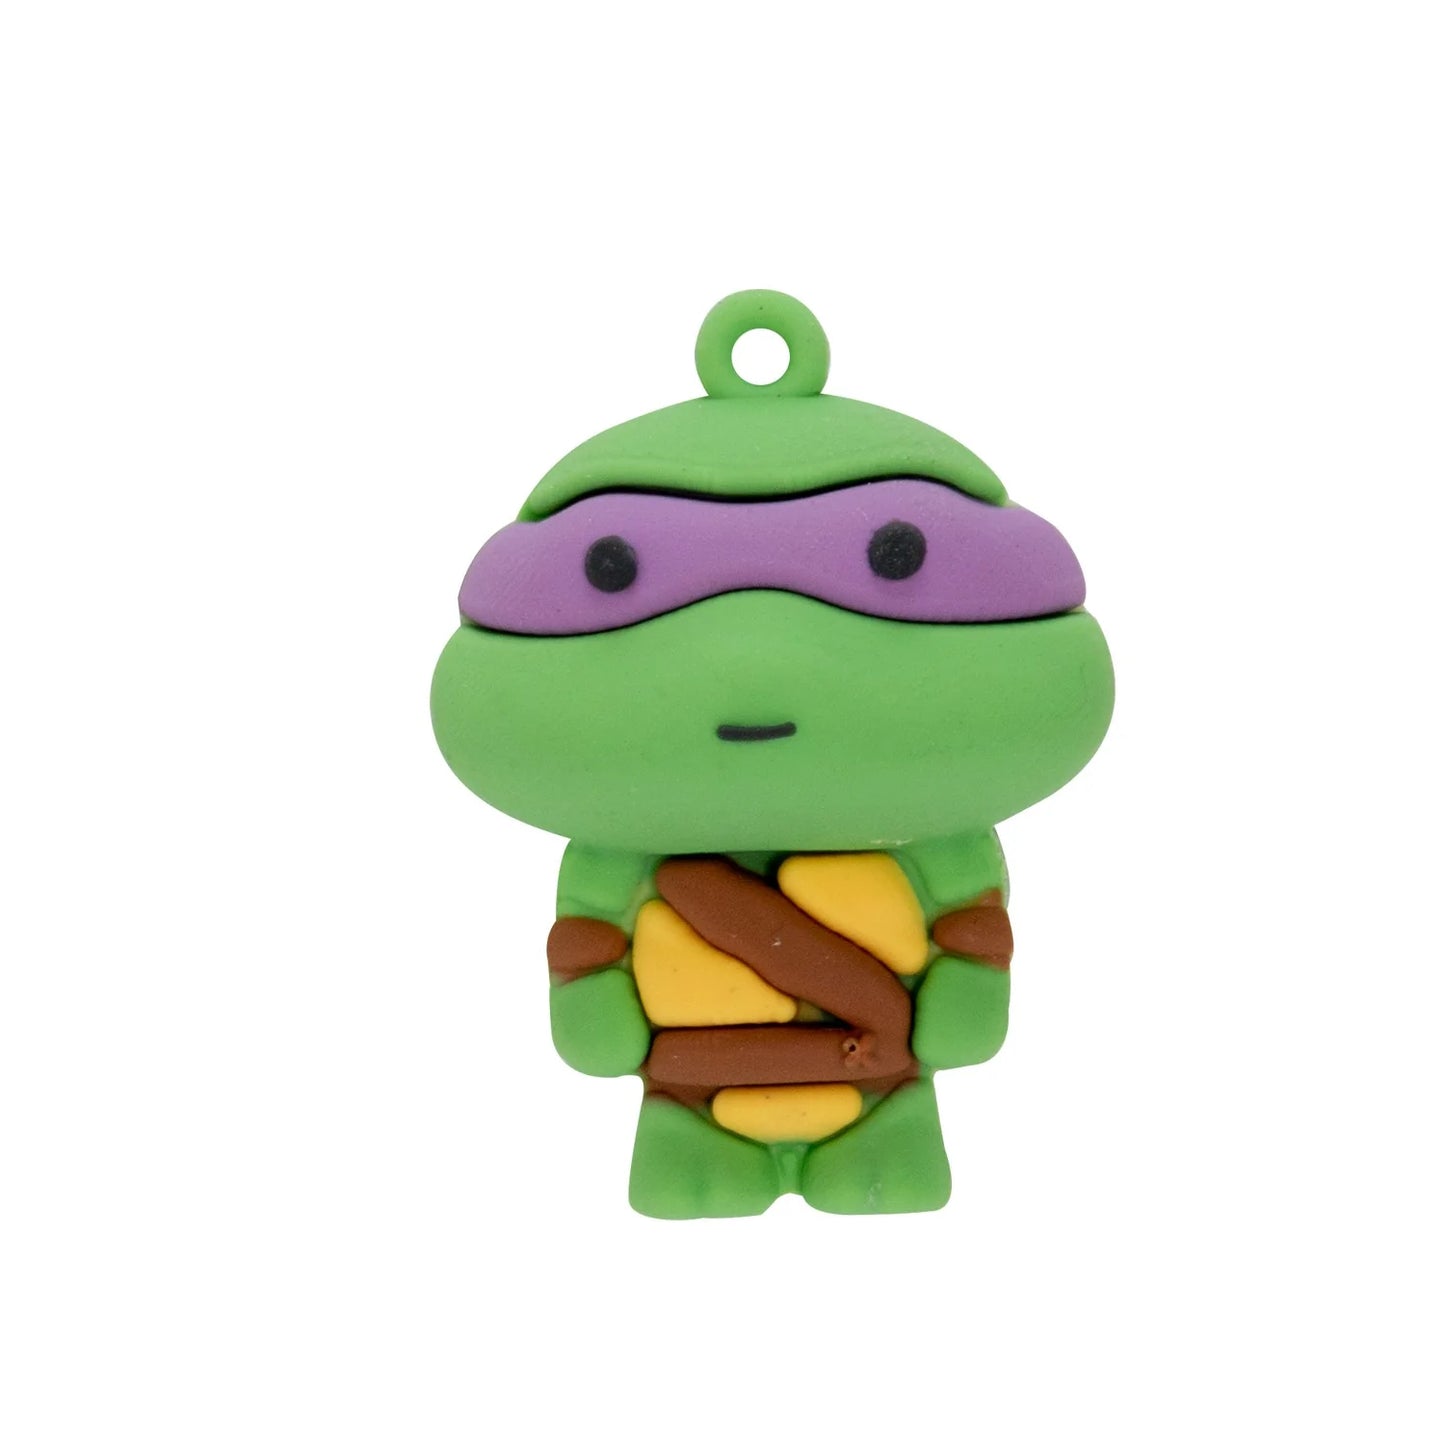 Stift mit Ninja Turtles-Anhänger